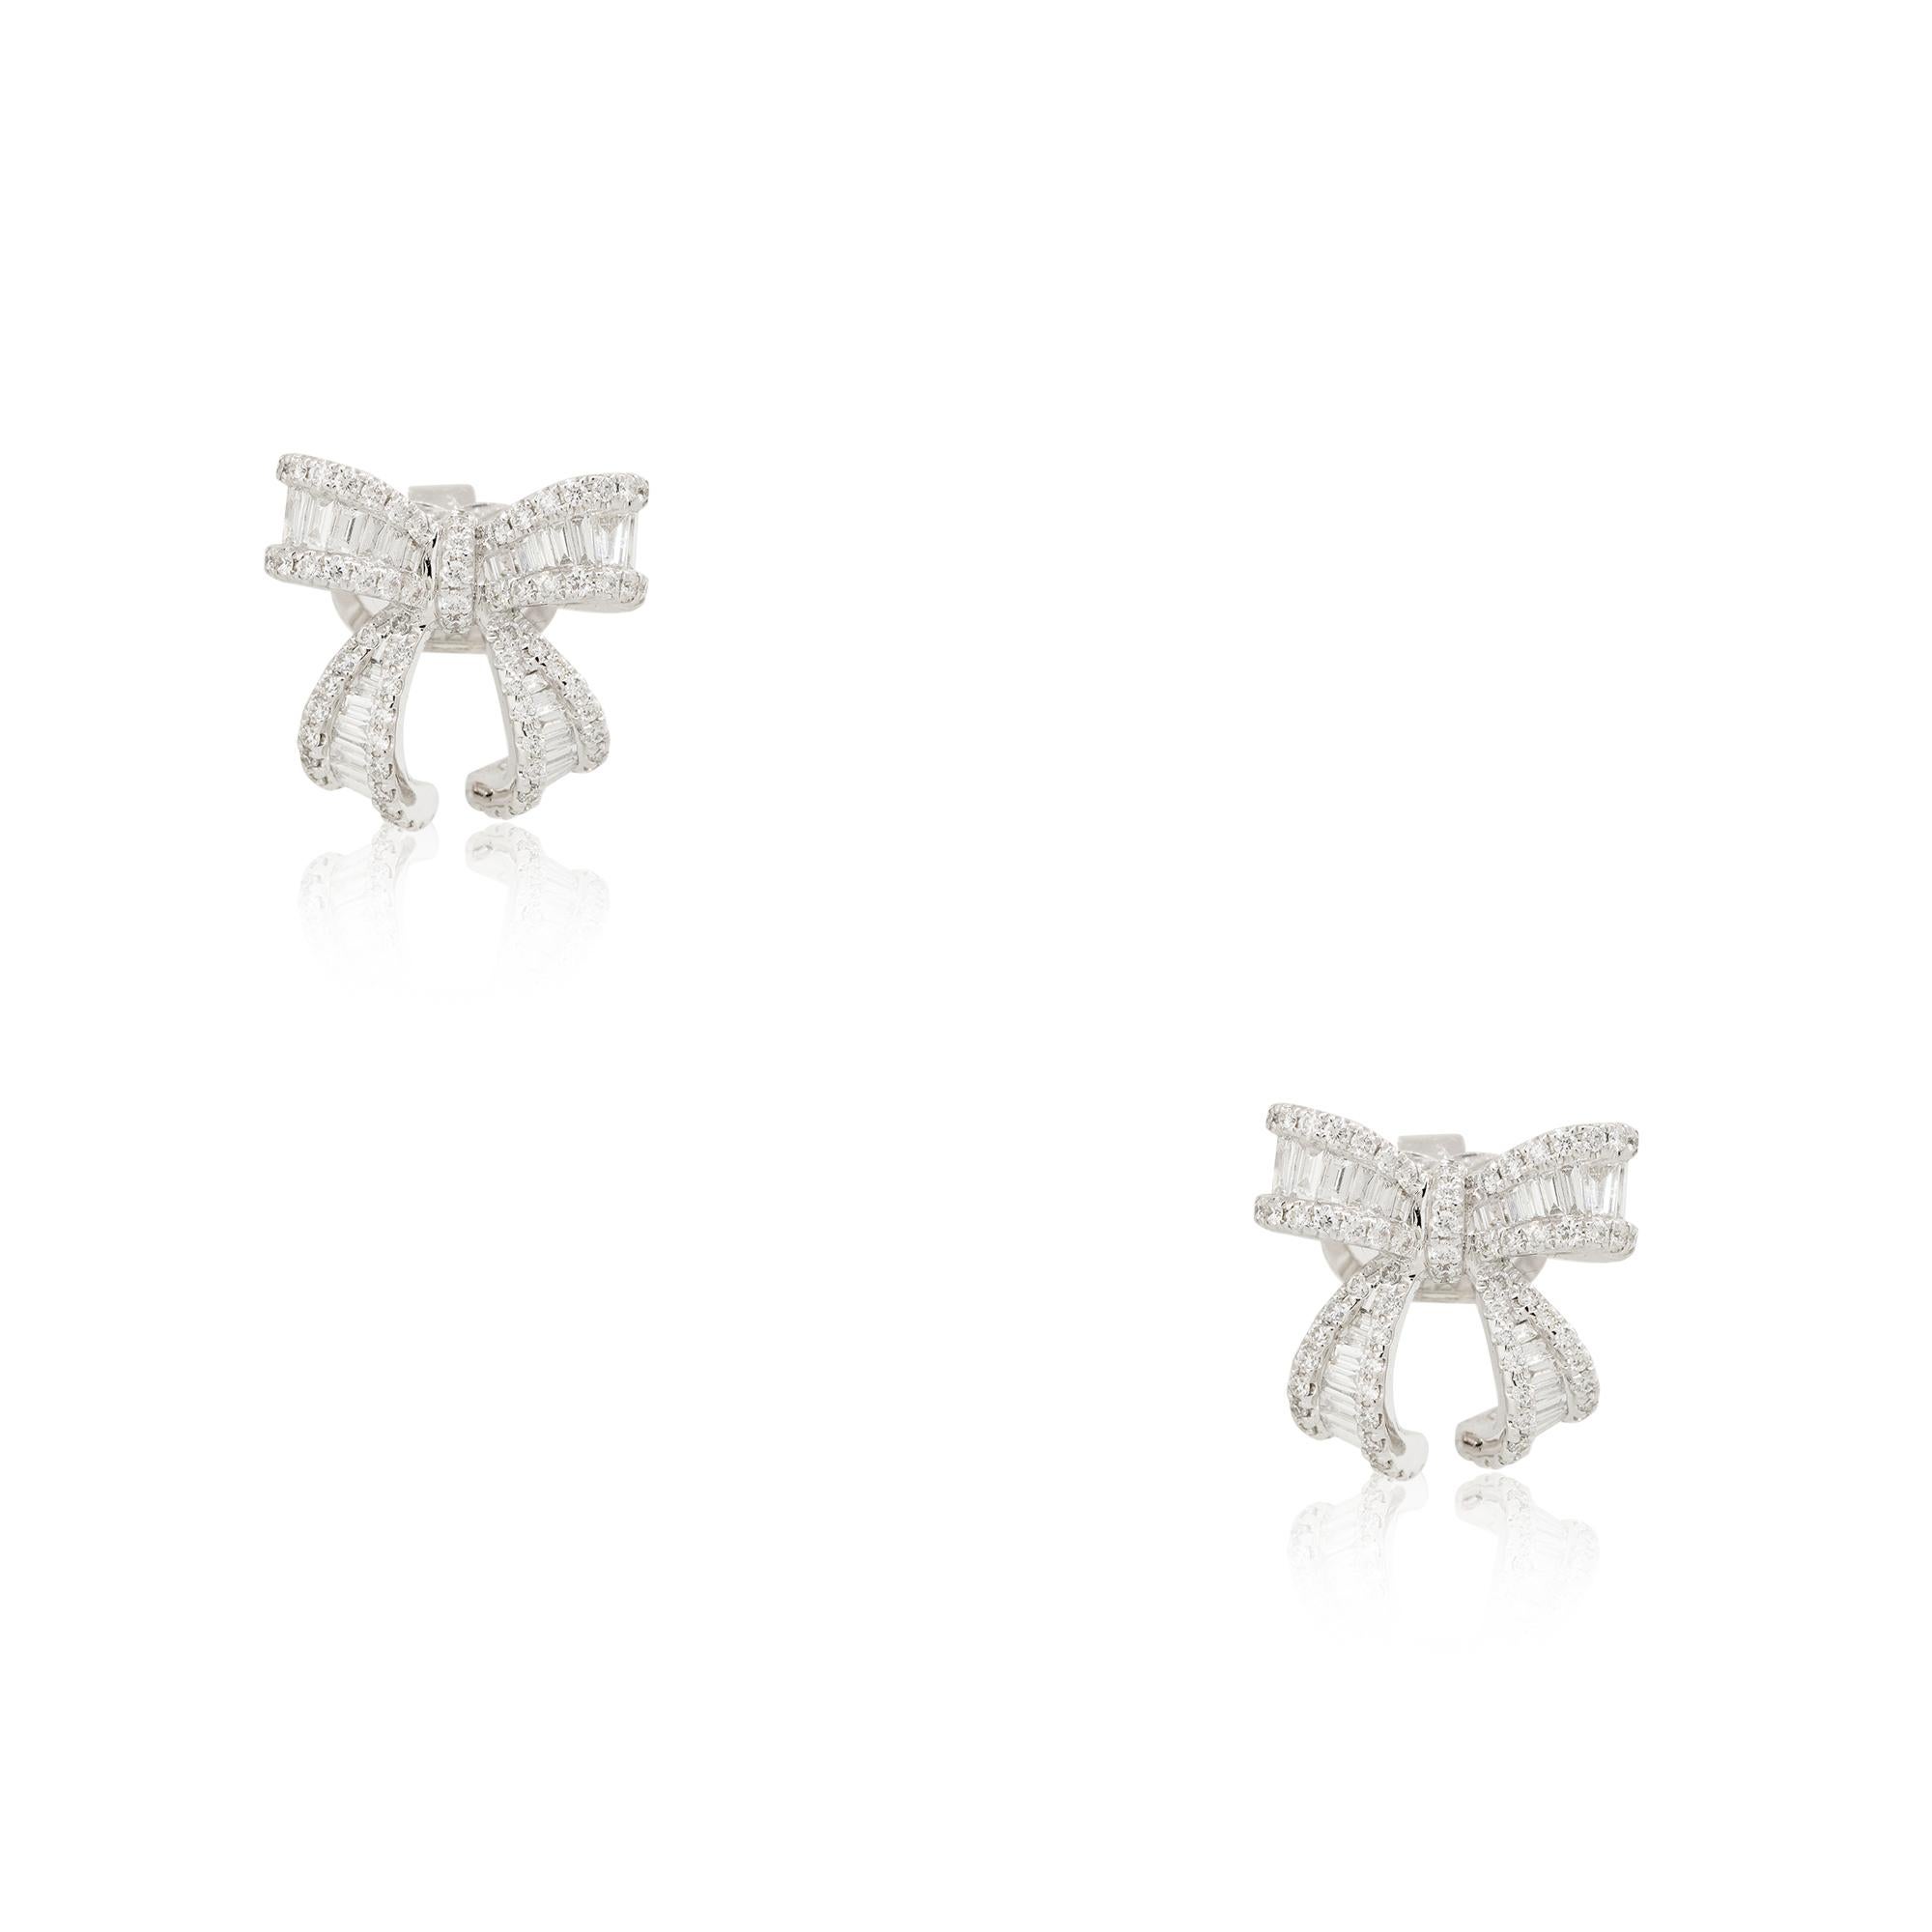 18k White Gold 1.26ctw Mosaic Diamond Bow Shaped Earrings
Product: Square Diamond Mosaic Earrings
Material: 18k White Gold
Diamond Details: There are approximately 0.70 carats of Baguette cut diamonds (63 stones) and approximately 0.56 carats of